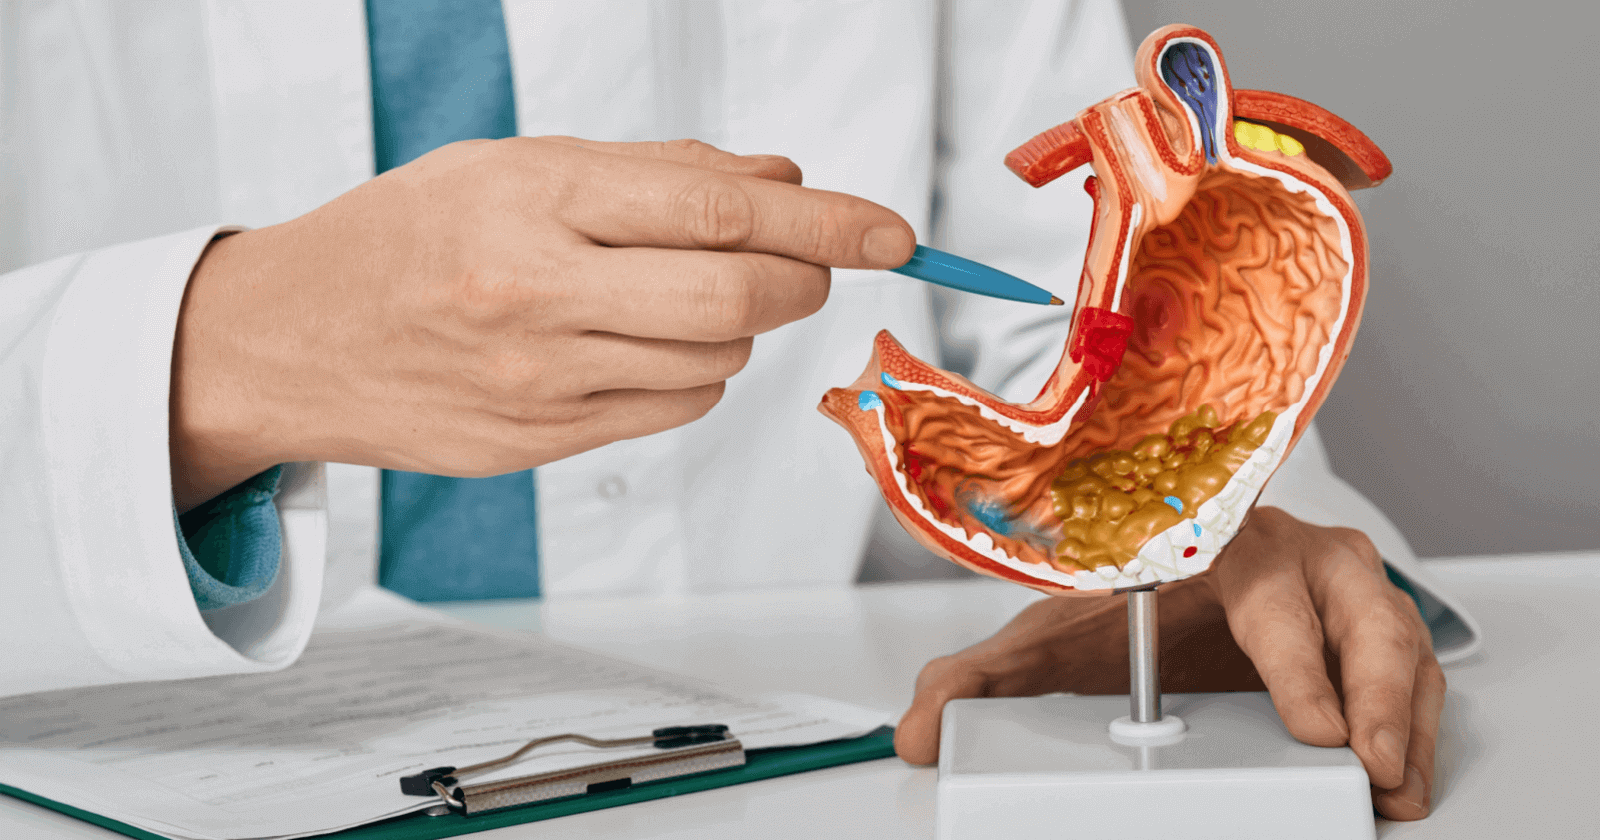 Gastroenterology: Understanding Your Digestive System